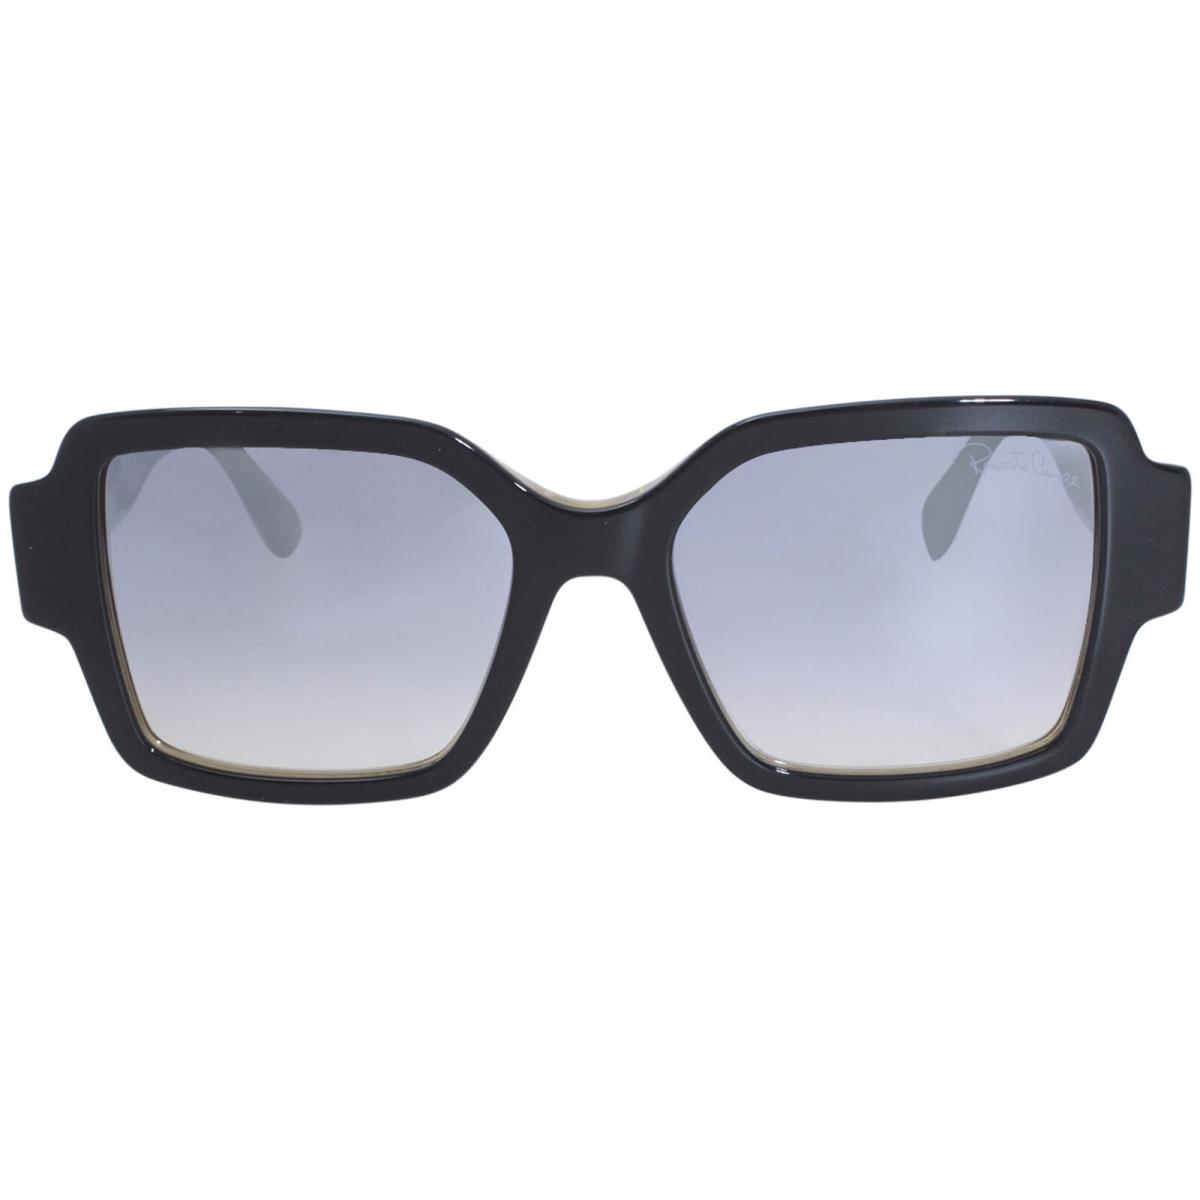 Roberto Cavalli RC1130 01C Sunglasses Women`s Black-gold/silver Mirror Lens 54mm